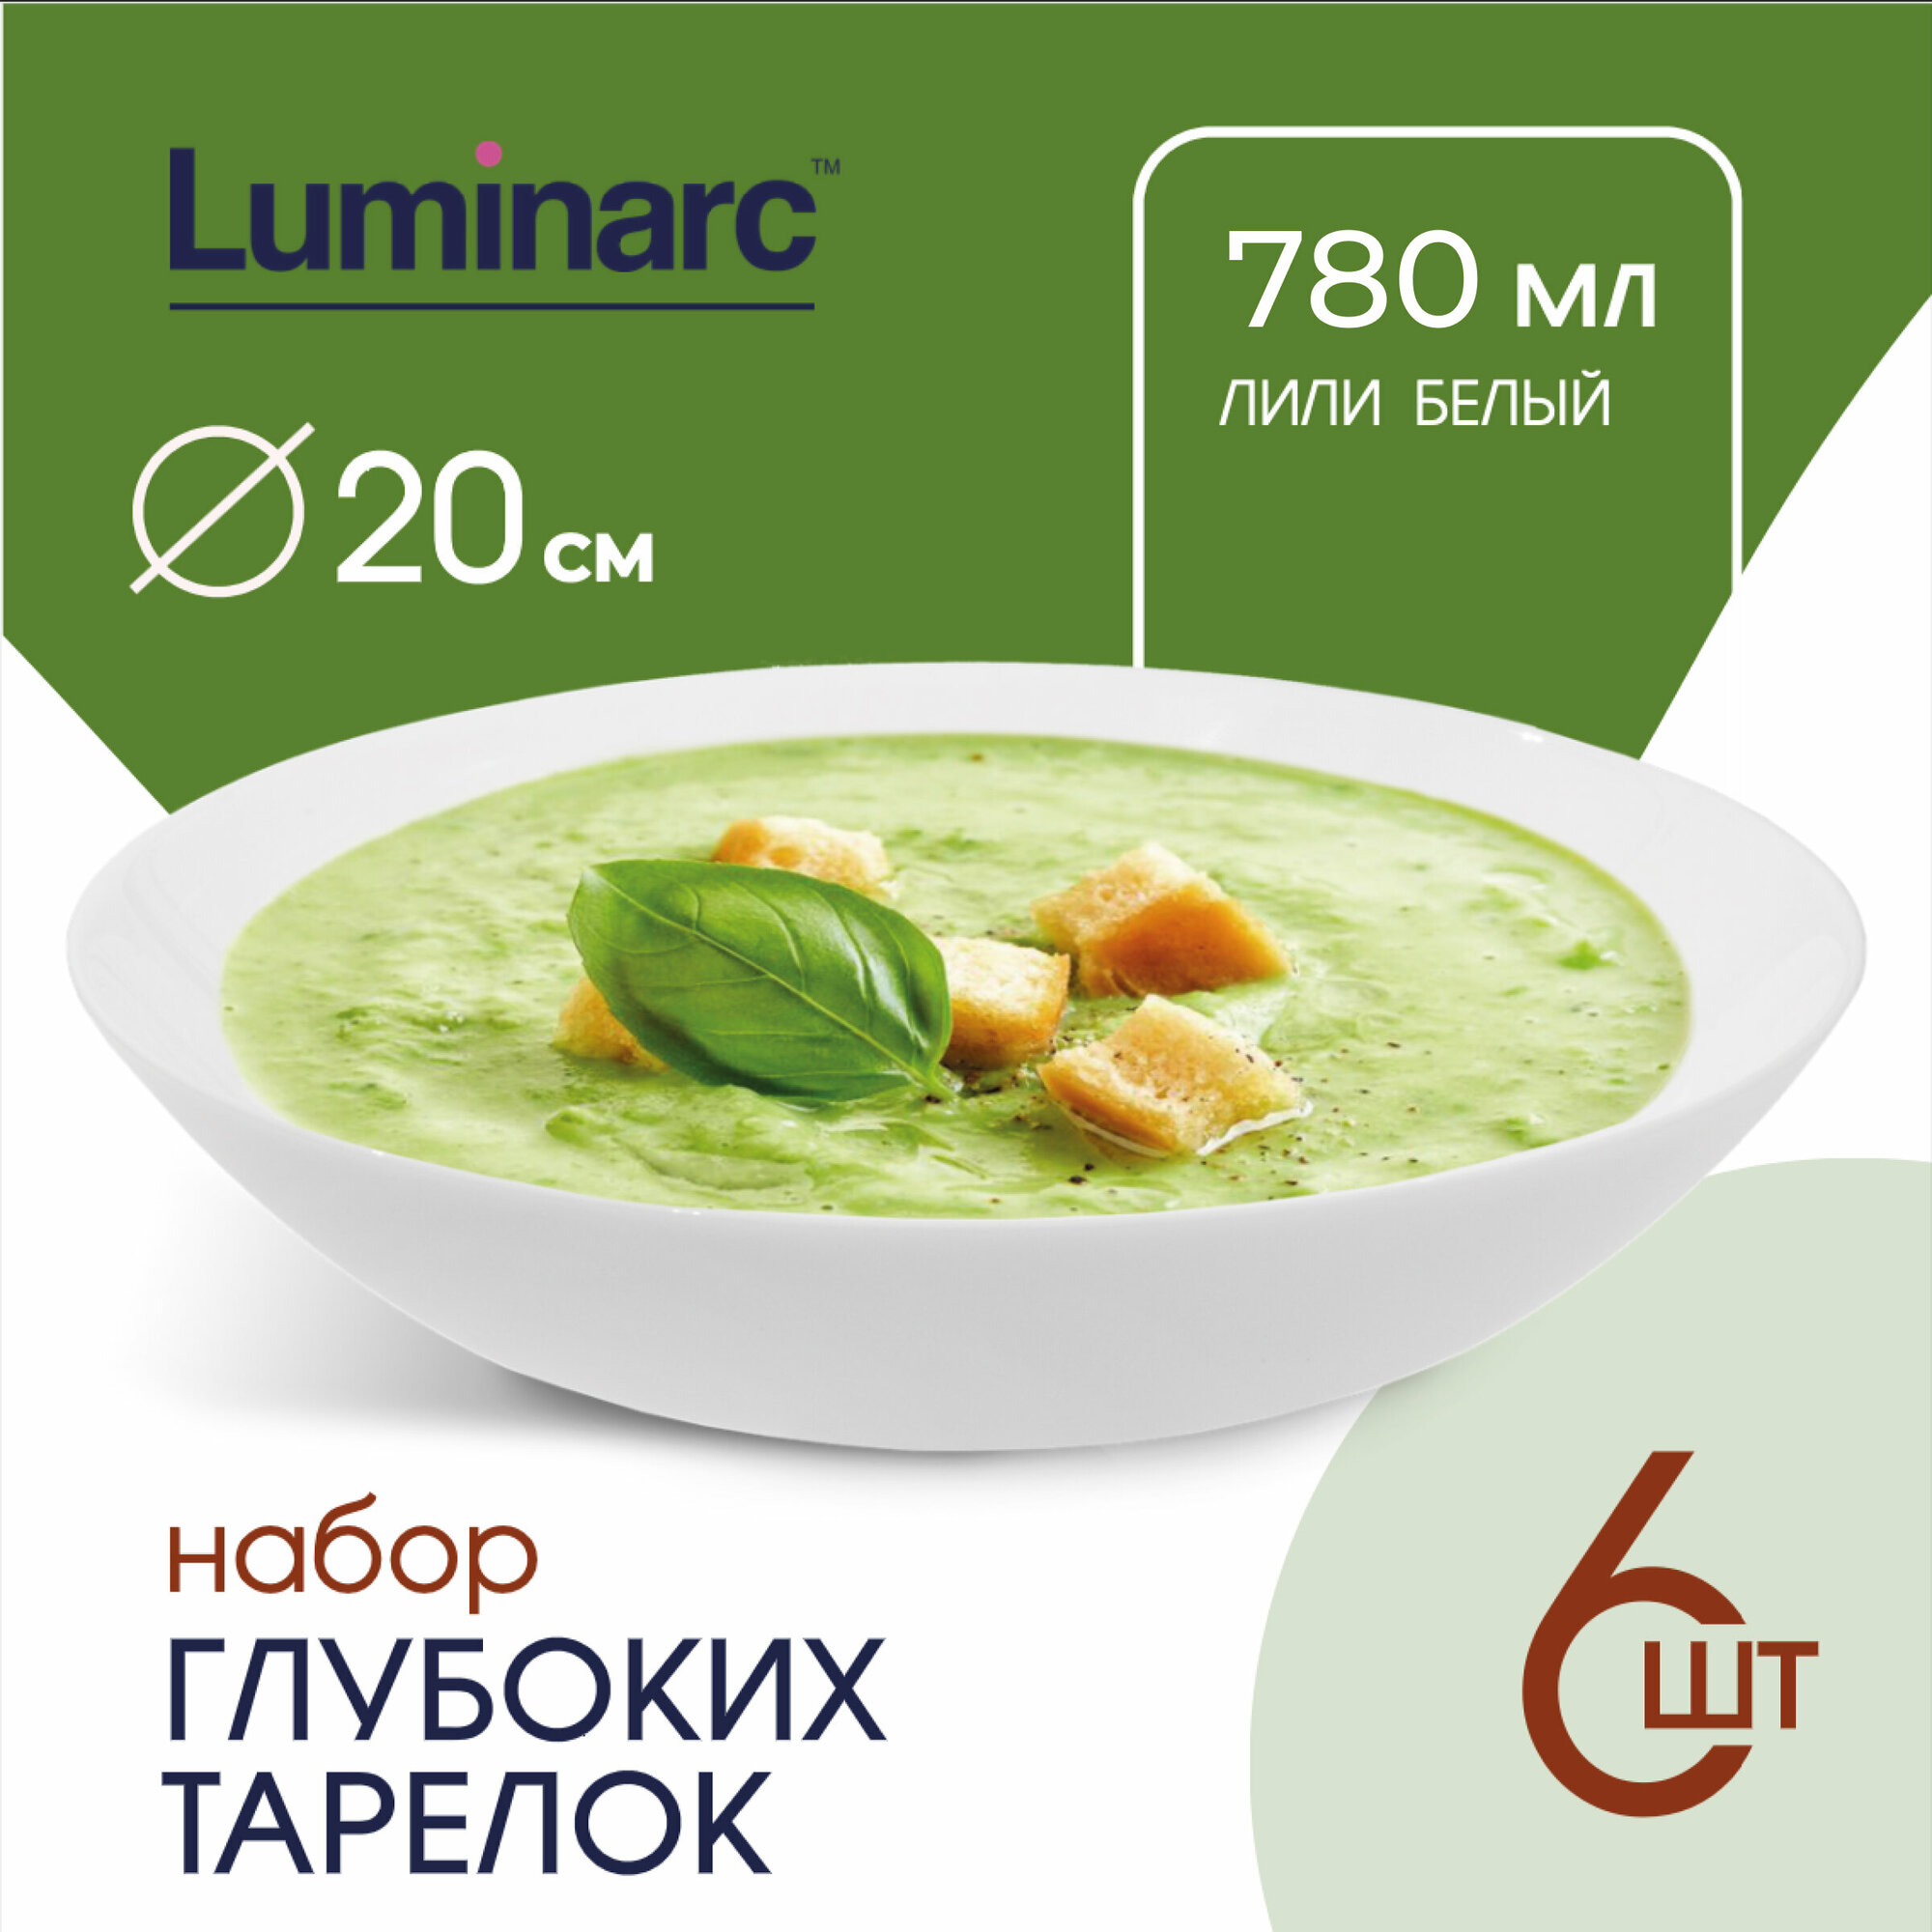 Тарелки Luminarc лили белый 780 мл / тарелка суповая 20 см / тарелки набор 6 шт